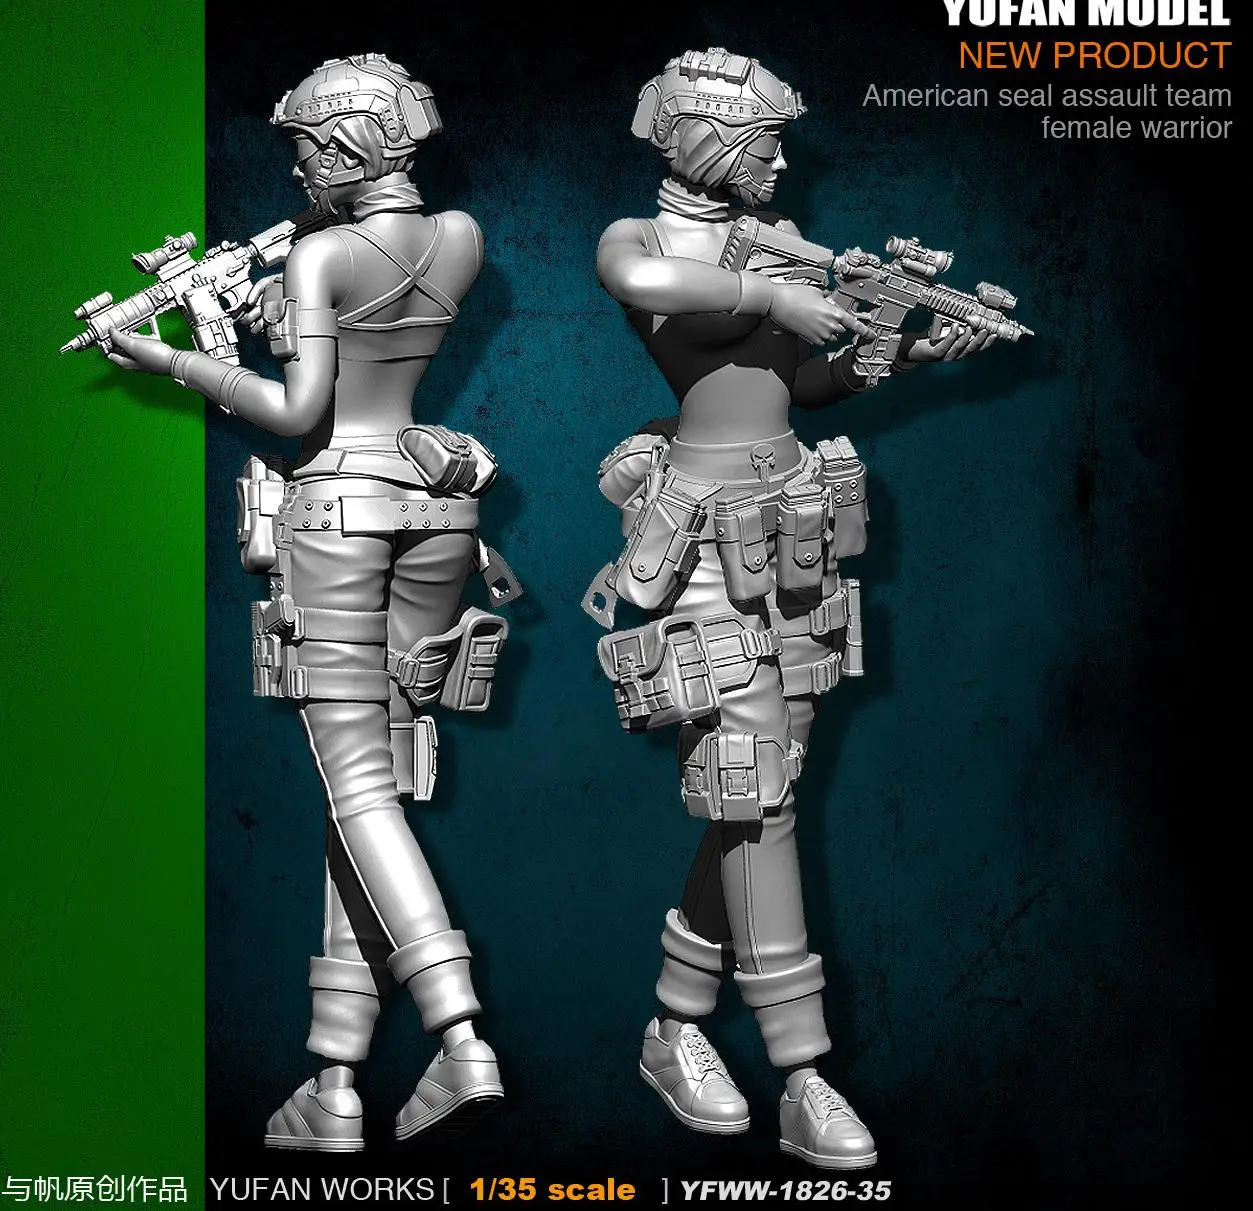 yufan model resin soldier originally created